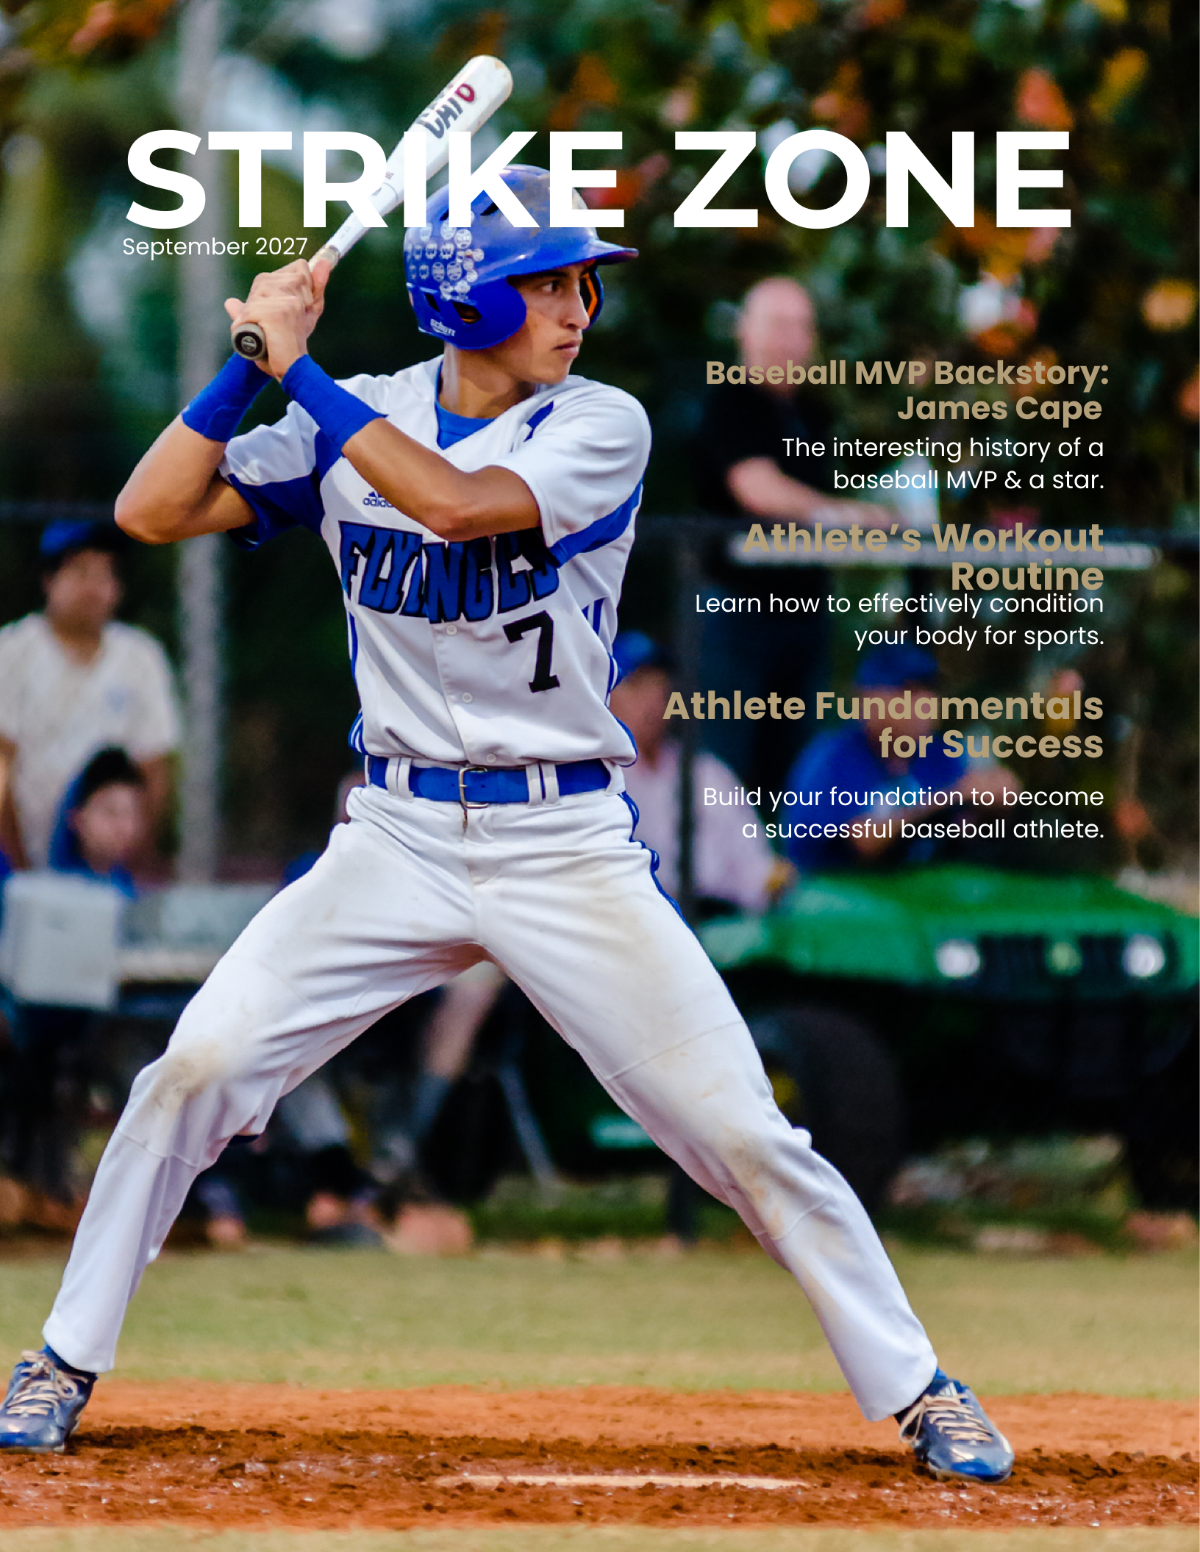 Baseball Magazine Template